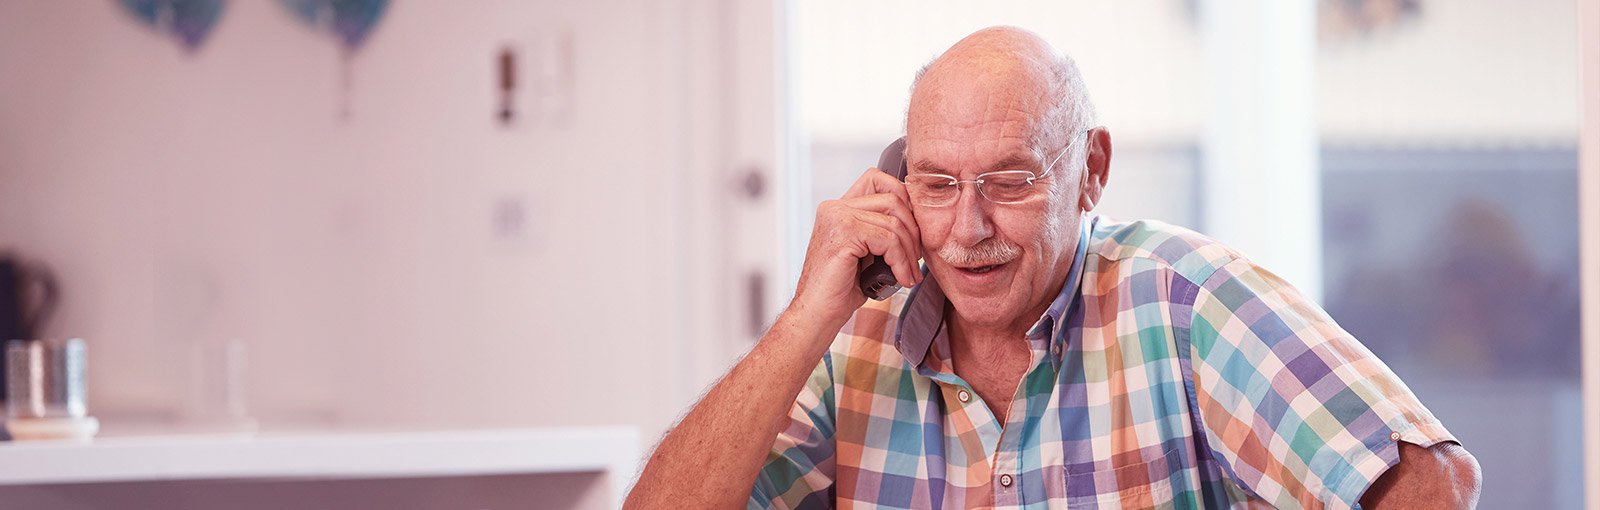 elderly man on home phone